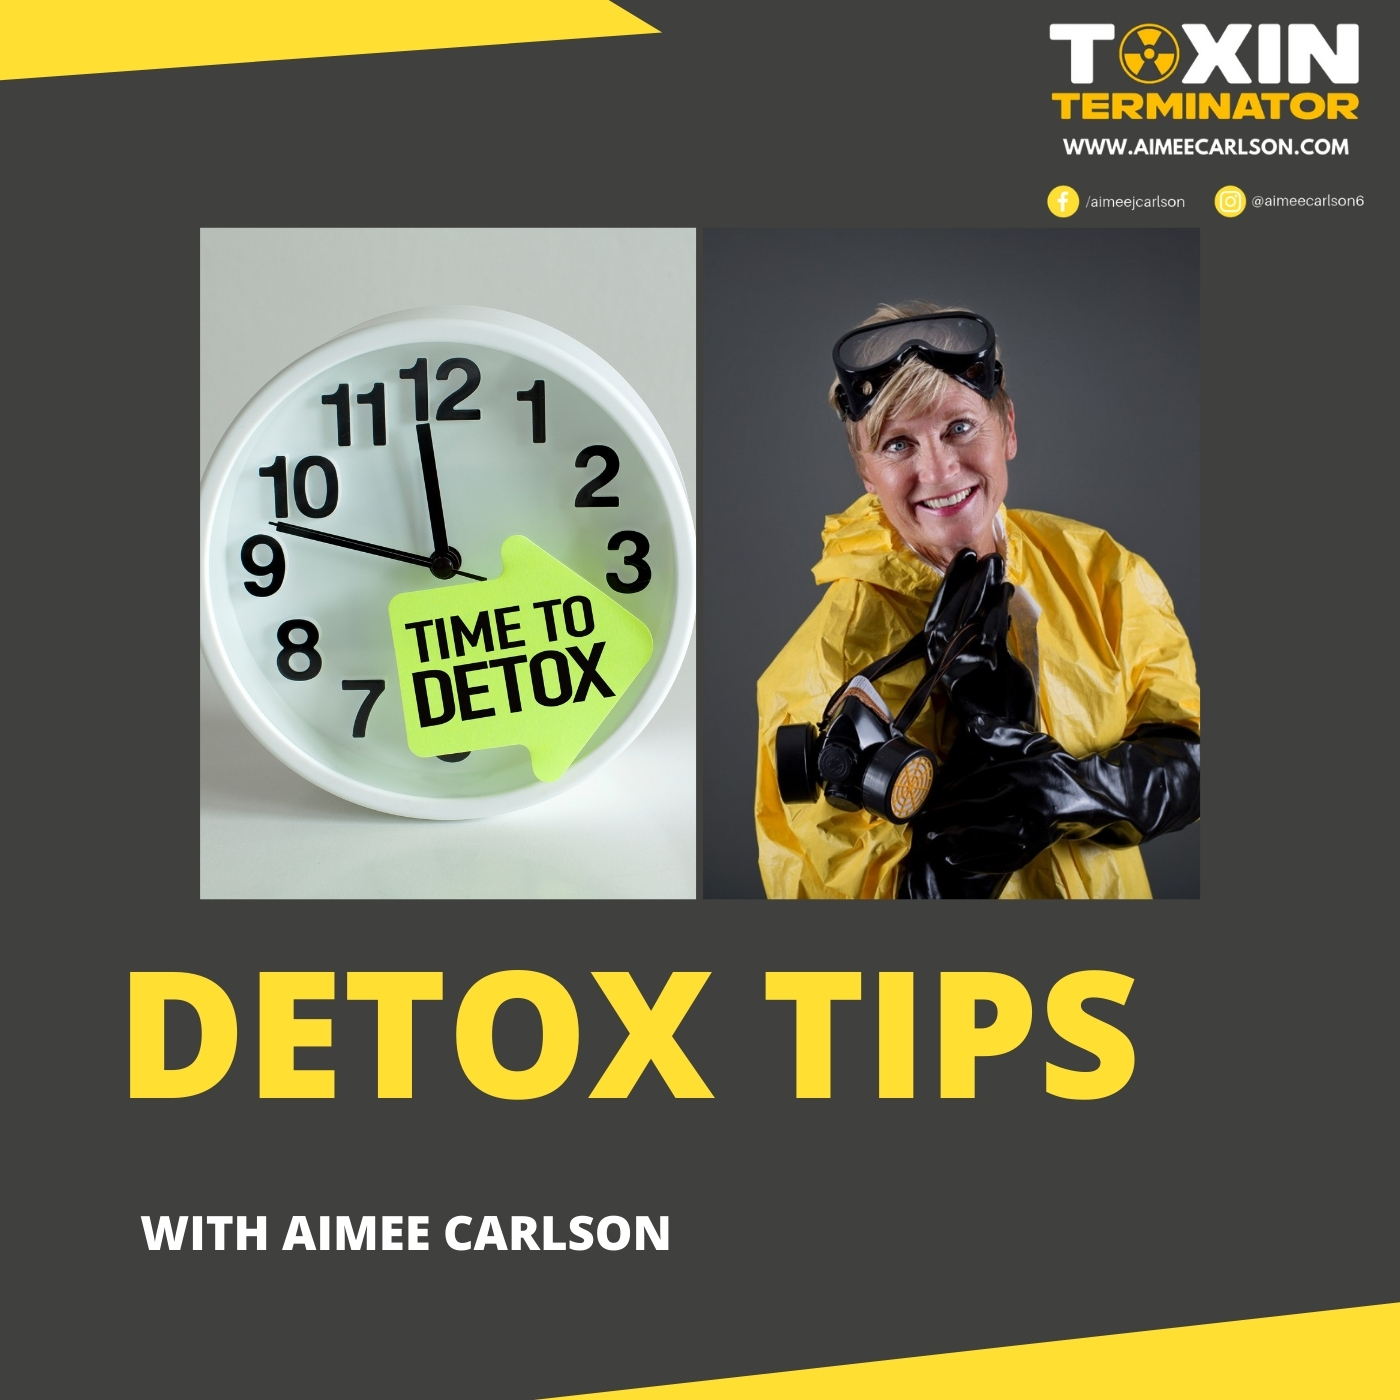 Detox Tips with Aimee Carlson